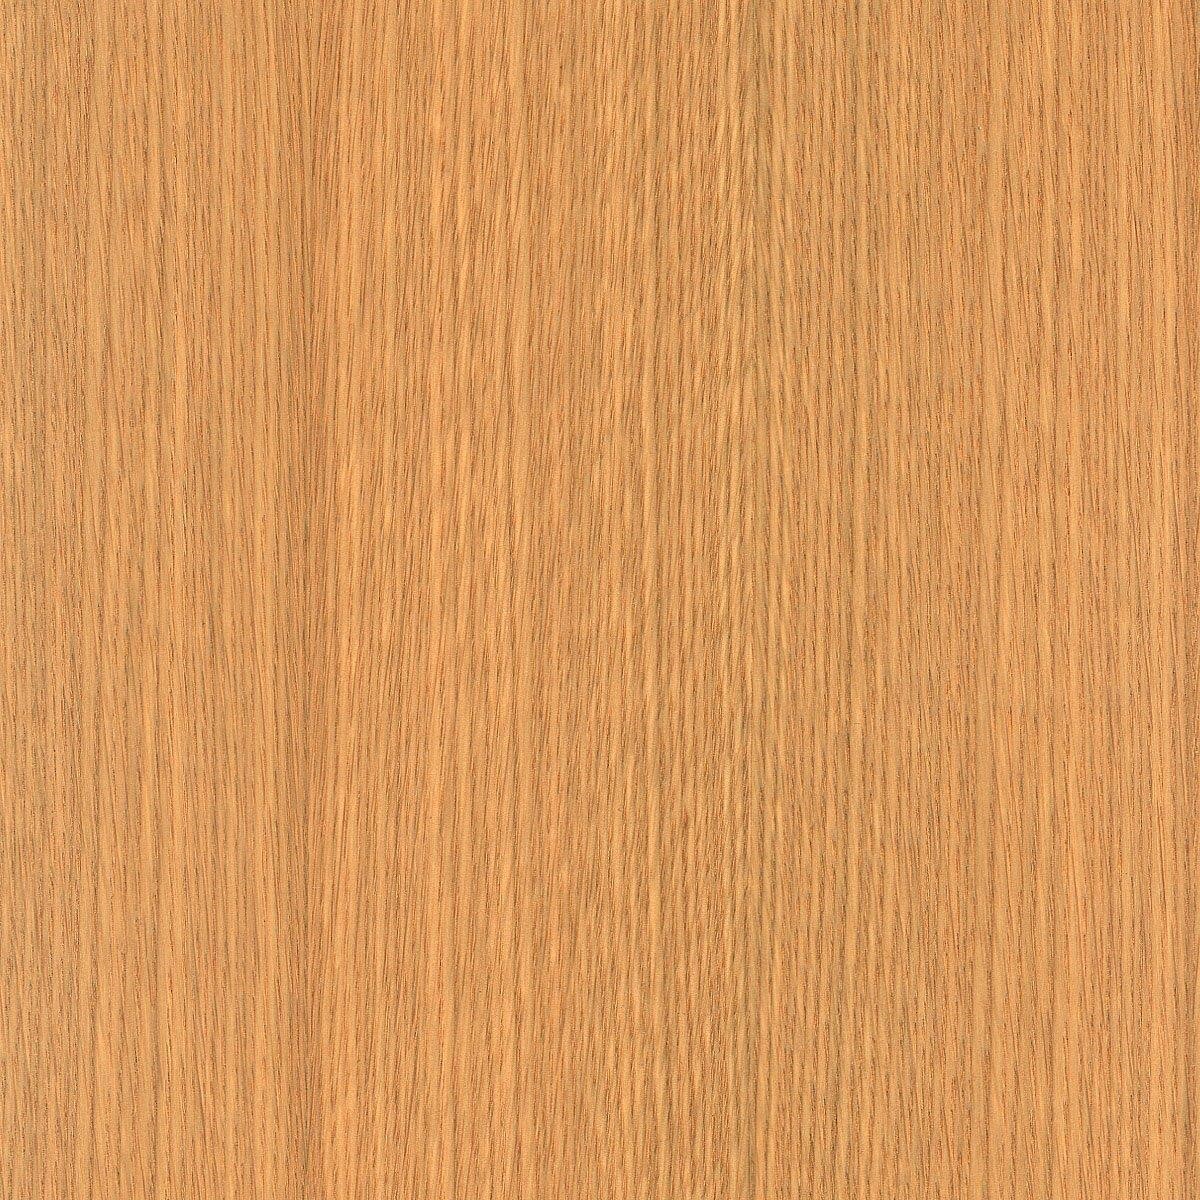 White Oak Veneer  Rift Cut  24x96  A Grade